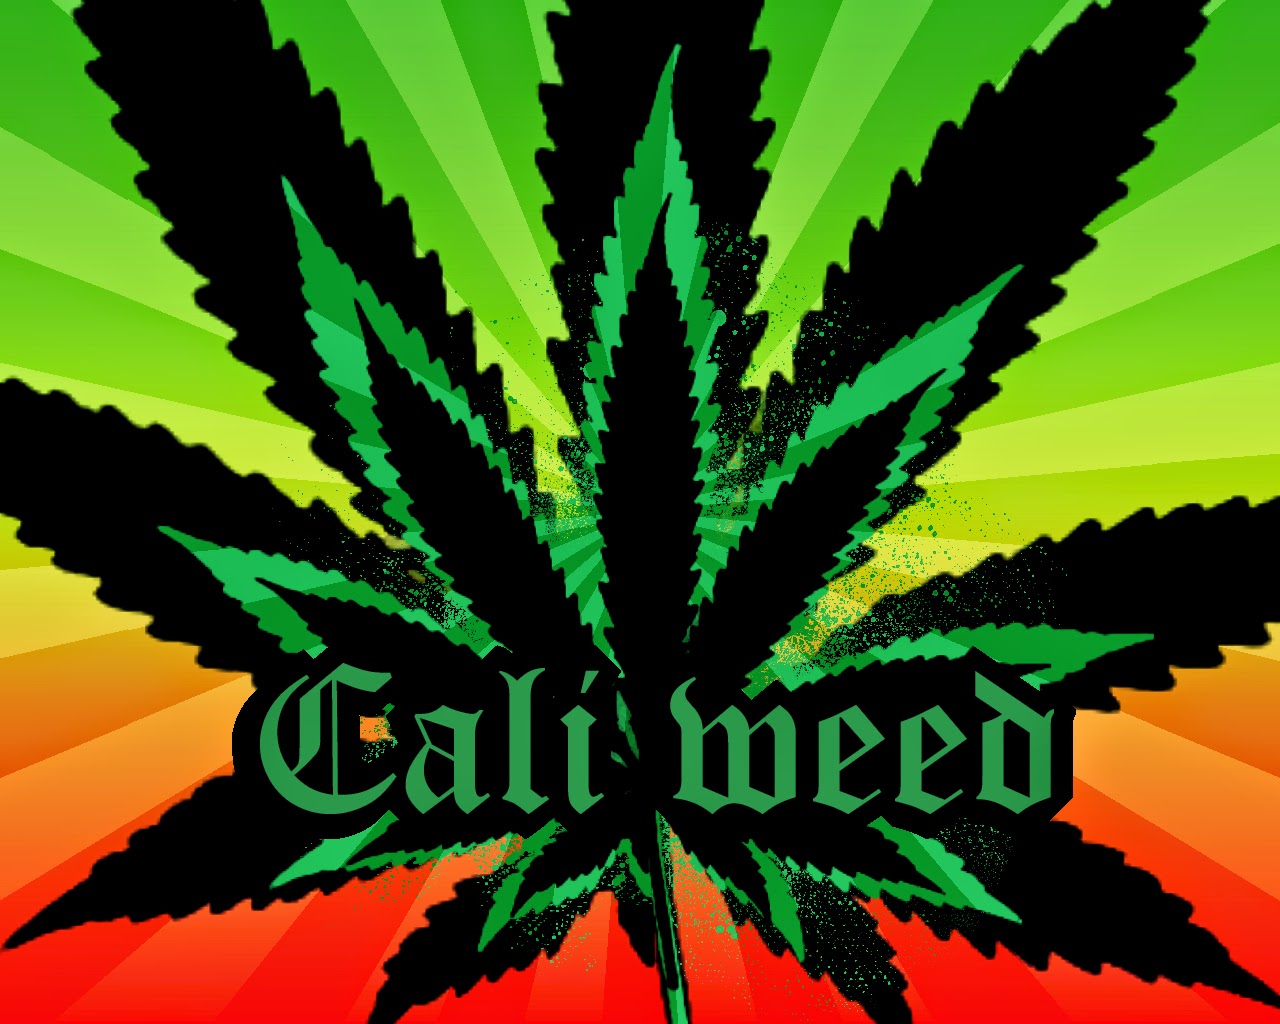 Weed Marijuana Canabis Grass Raggae Pot Smoking Edibles